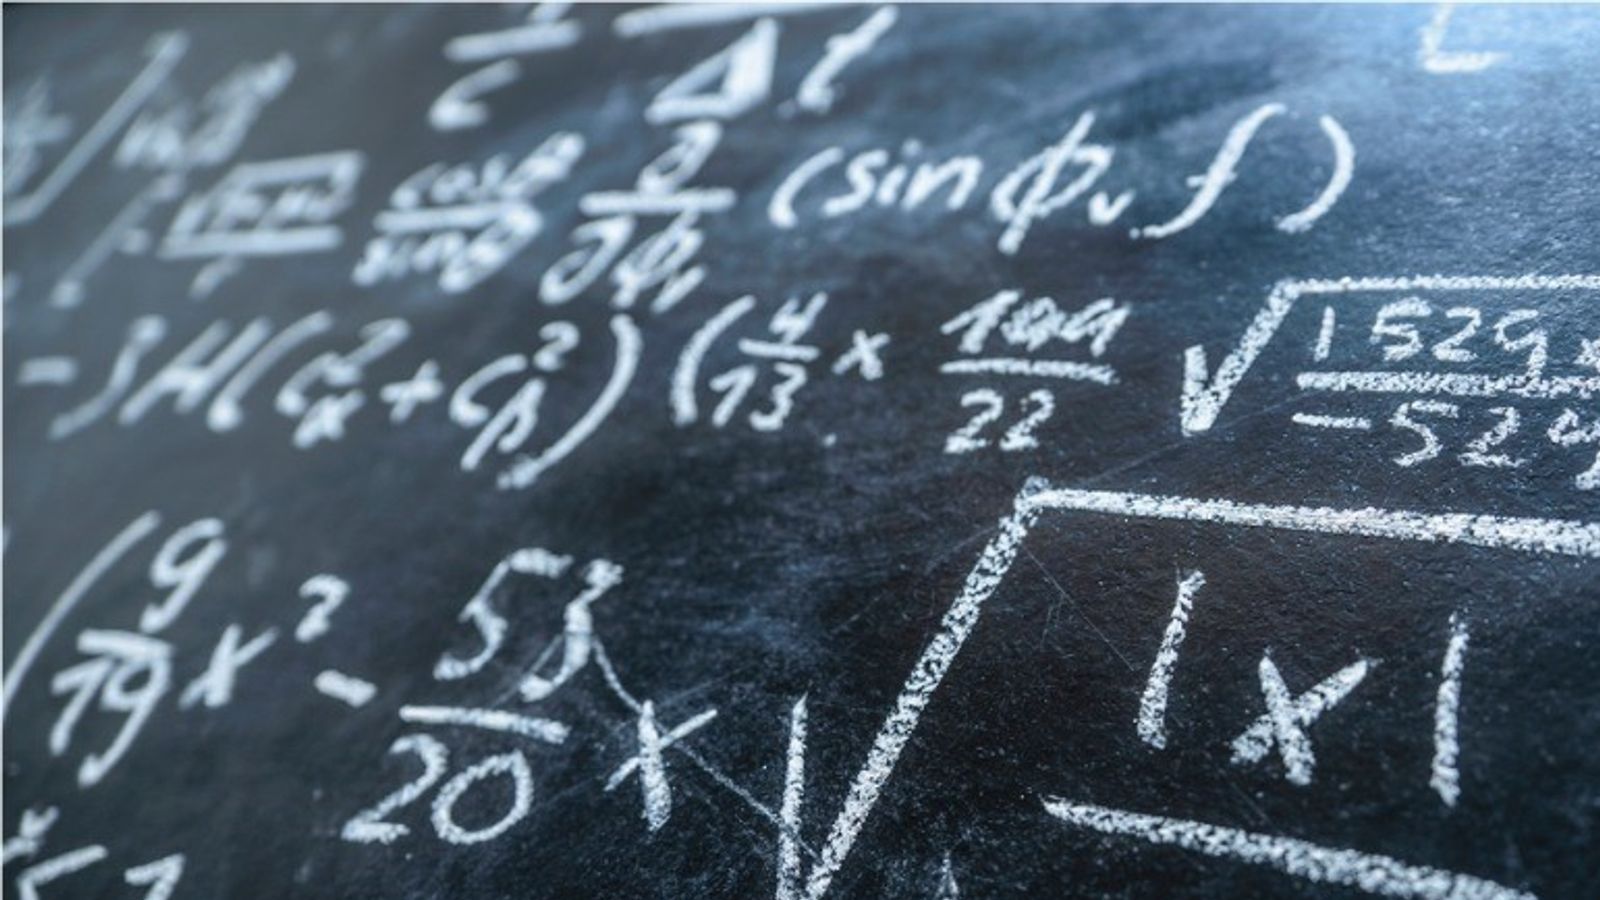 Maths trick blows people's minds on Twitter | UK News | Sky News